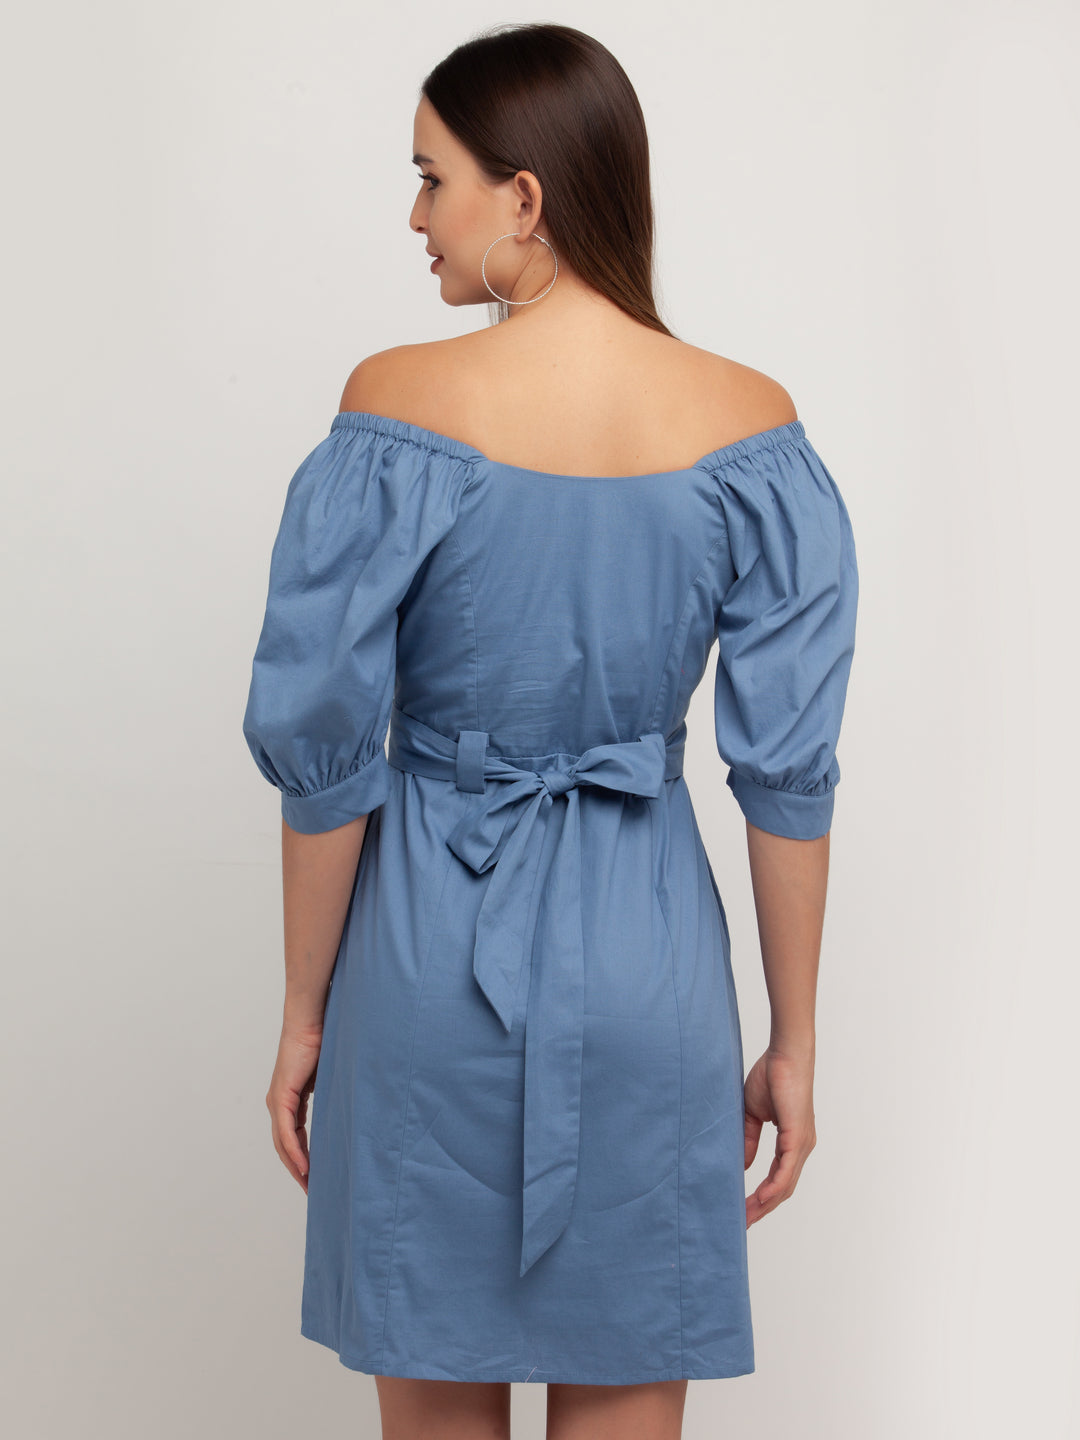 Blue Solid Short Dress For Women